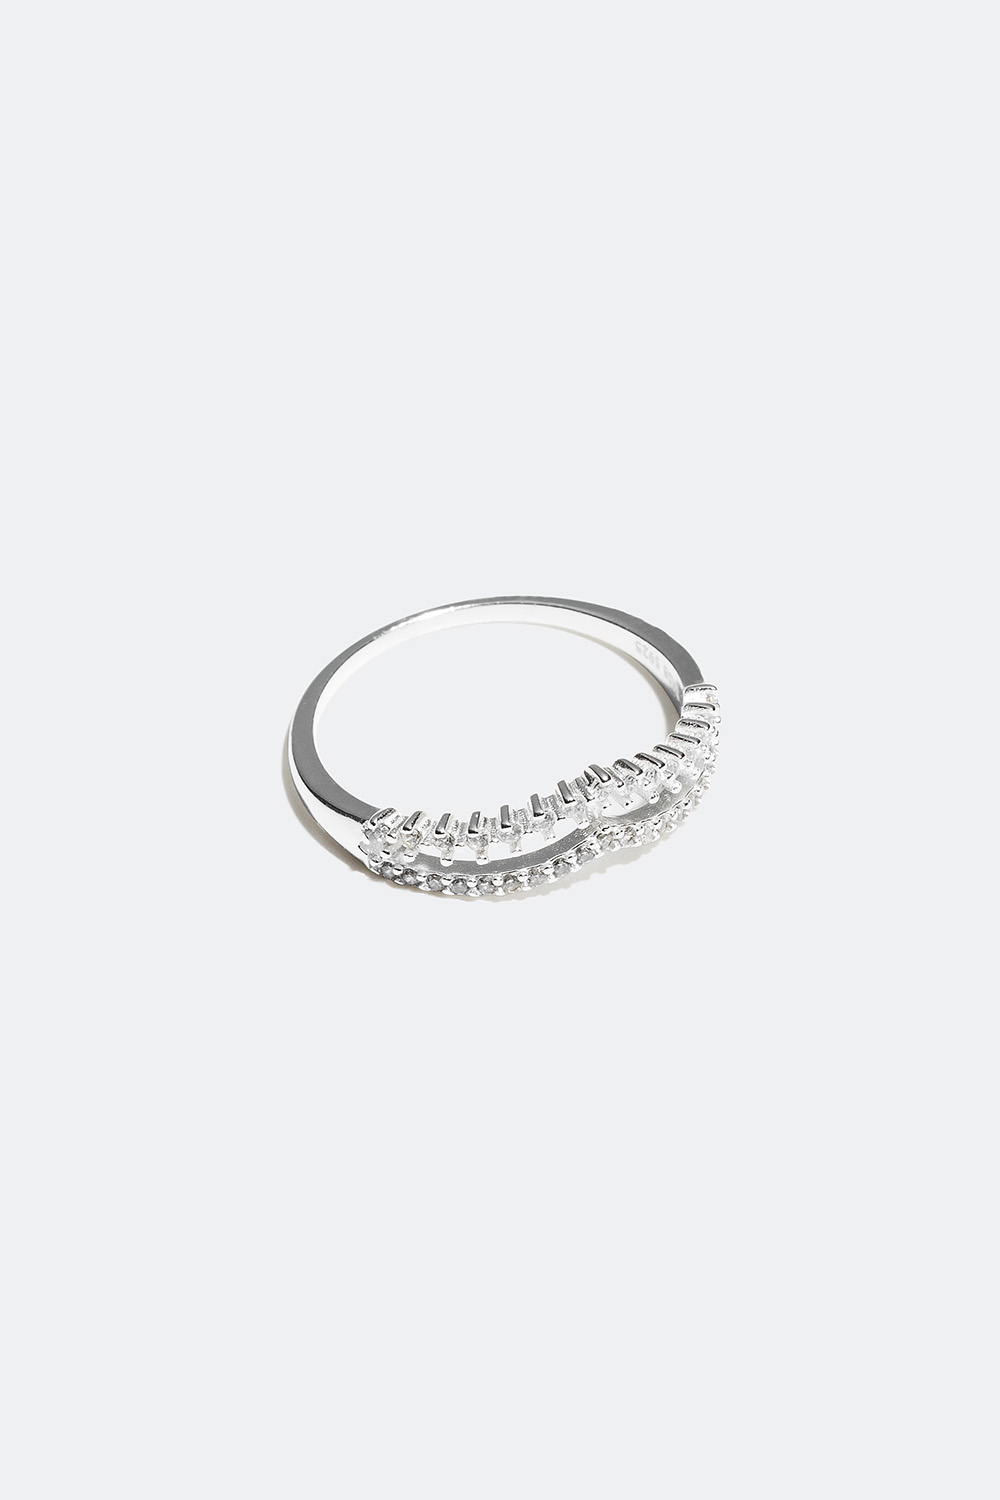 Ring i ægte sølv med v-formet design i gruppen Ægte sølv / Sølvringe / Sølv hos Glitter (55600006)